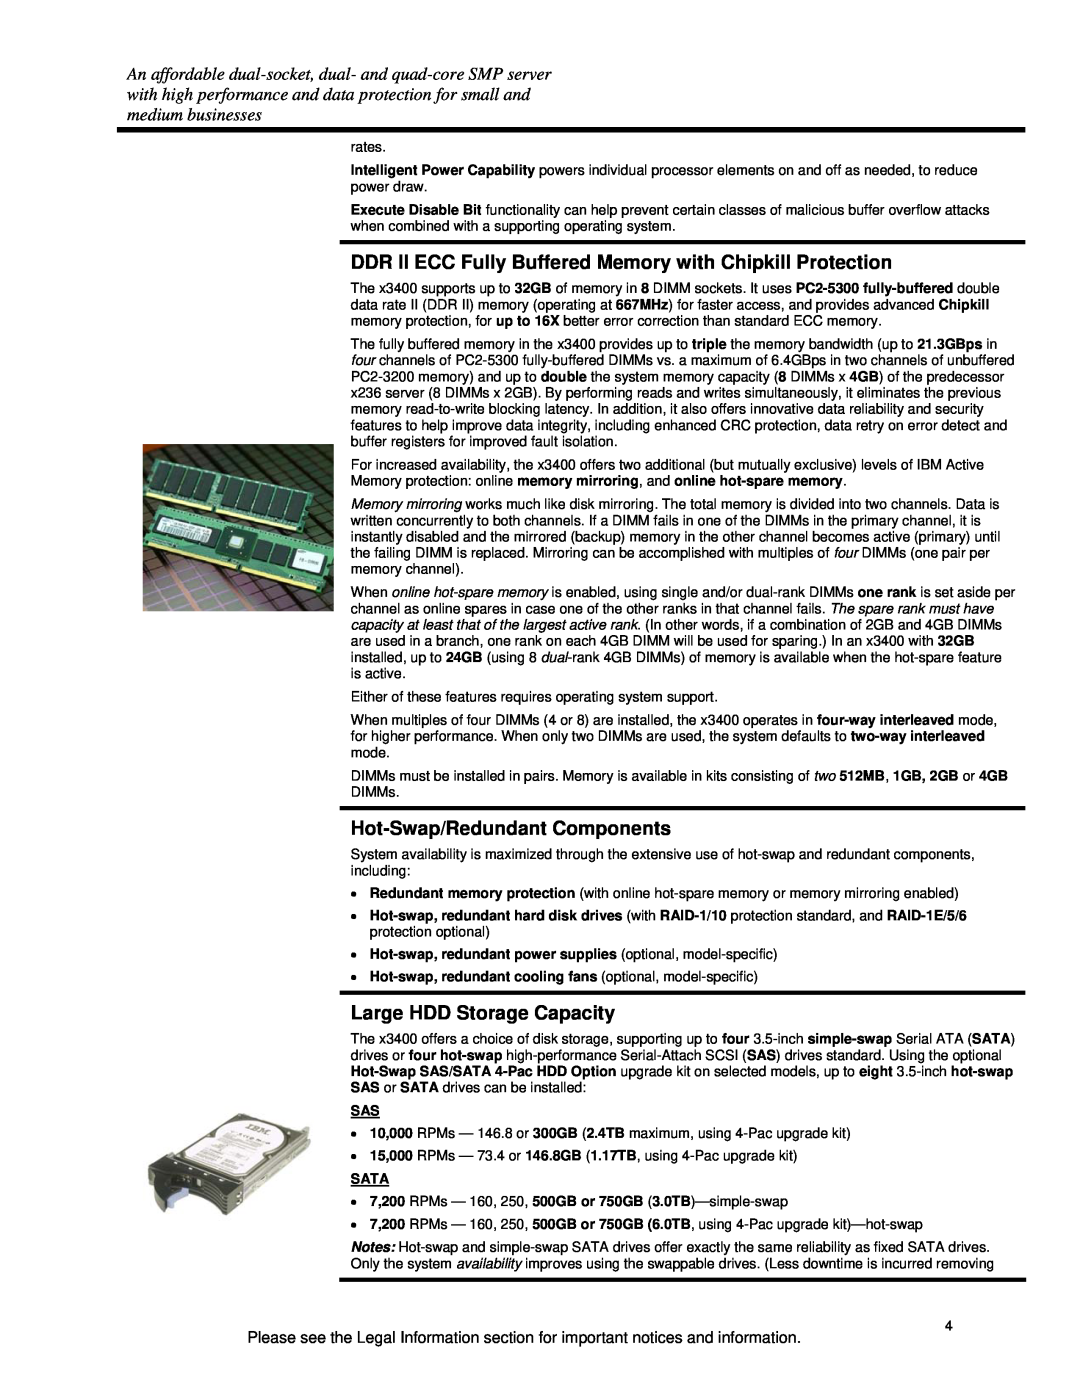 IBM x3400 specifications Hot-Swap/RedundantComponents, Large HDD Storage Capacity 